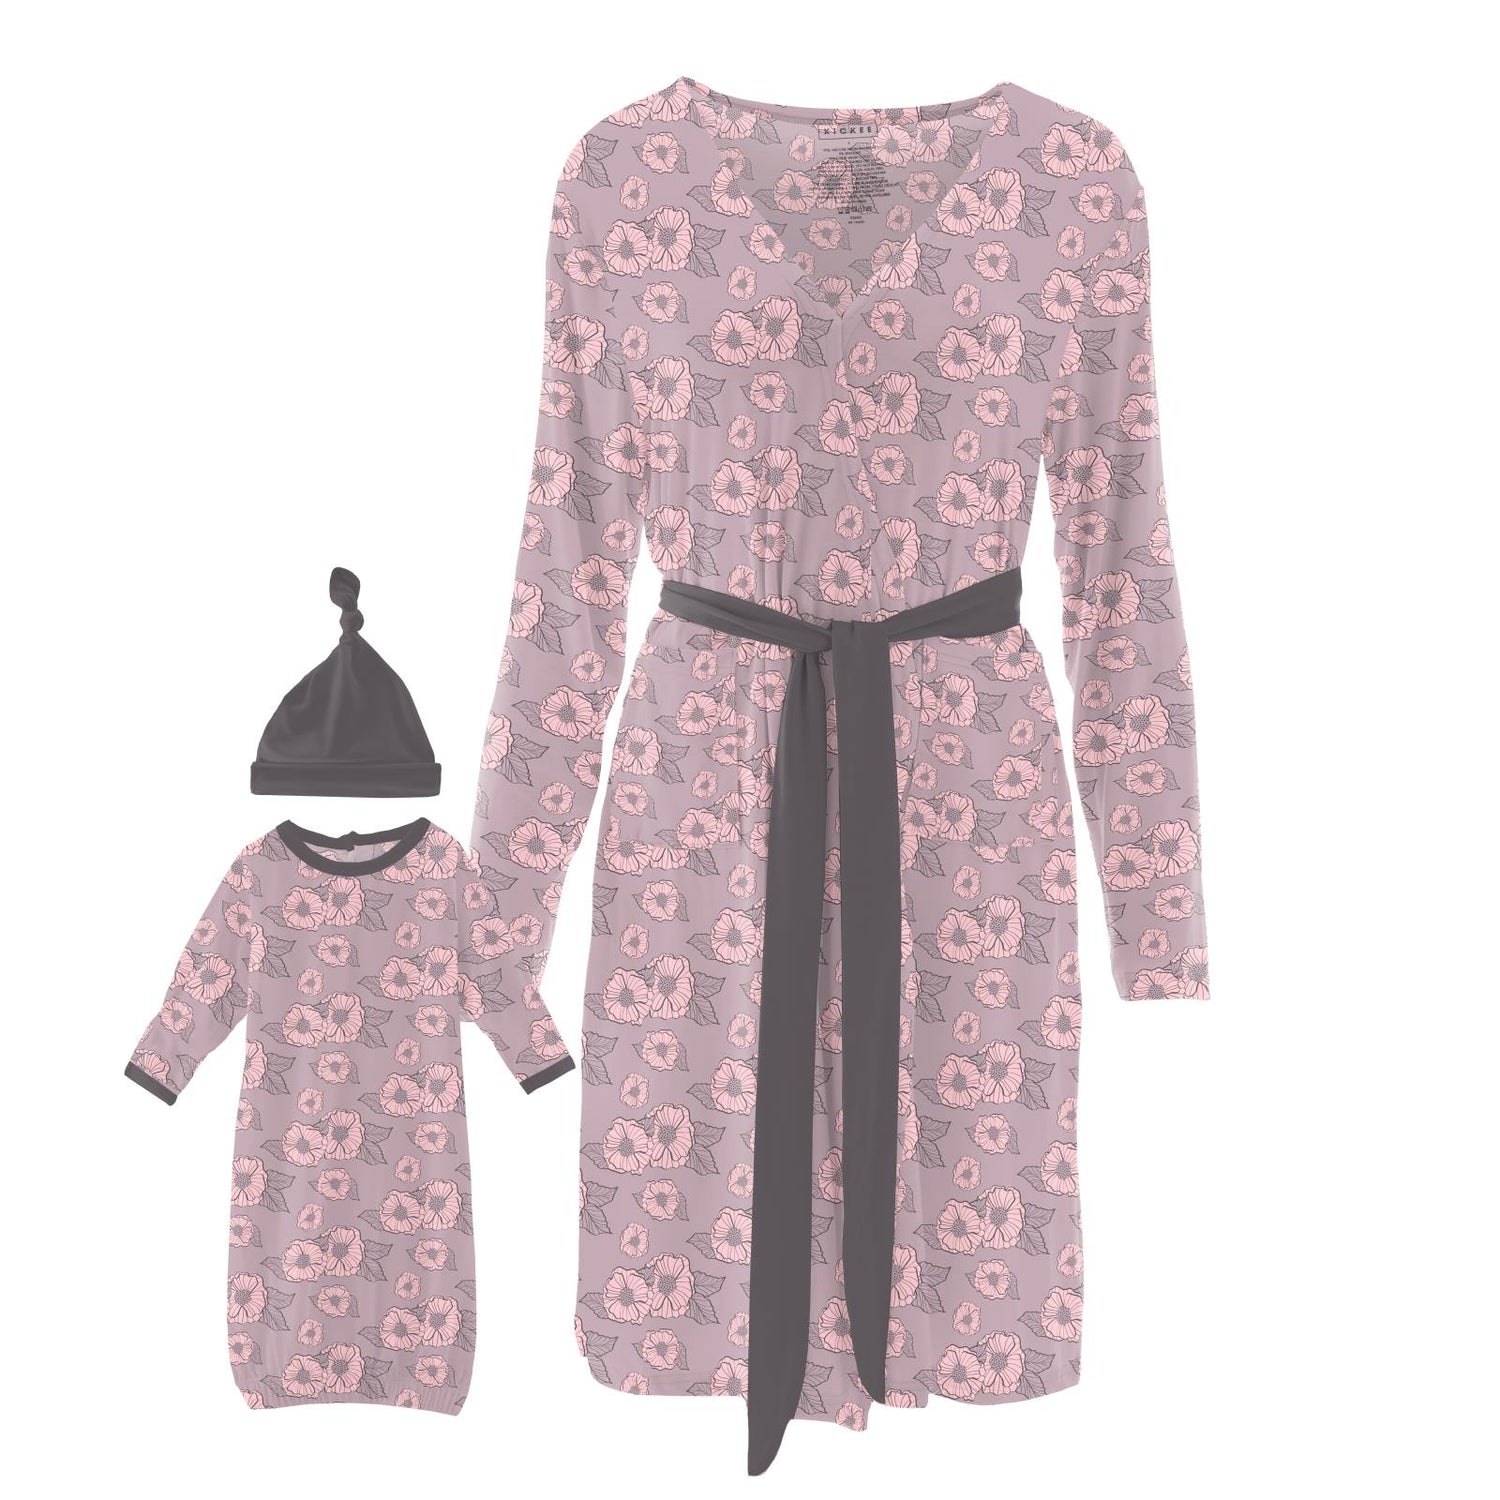 Women's Print Maternity/Nursing Robe & Layette Gown Set in Sweet Pea Poppies